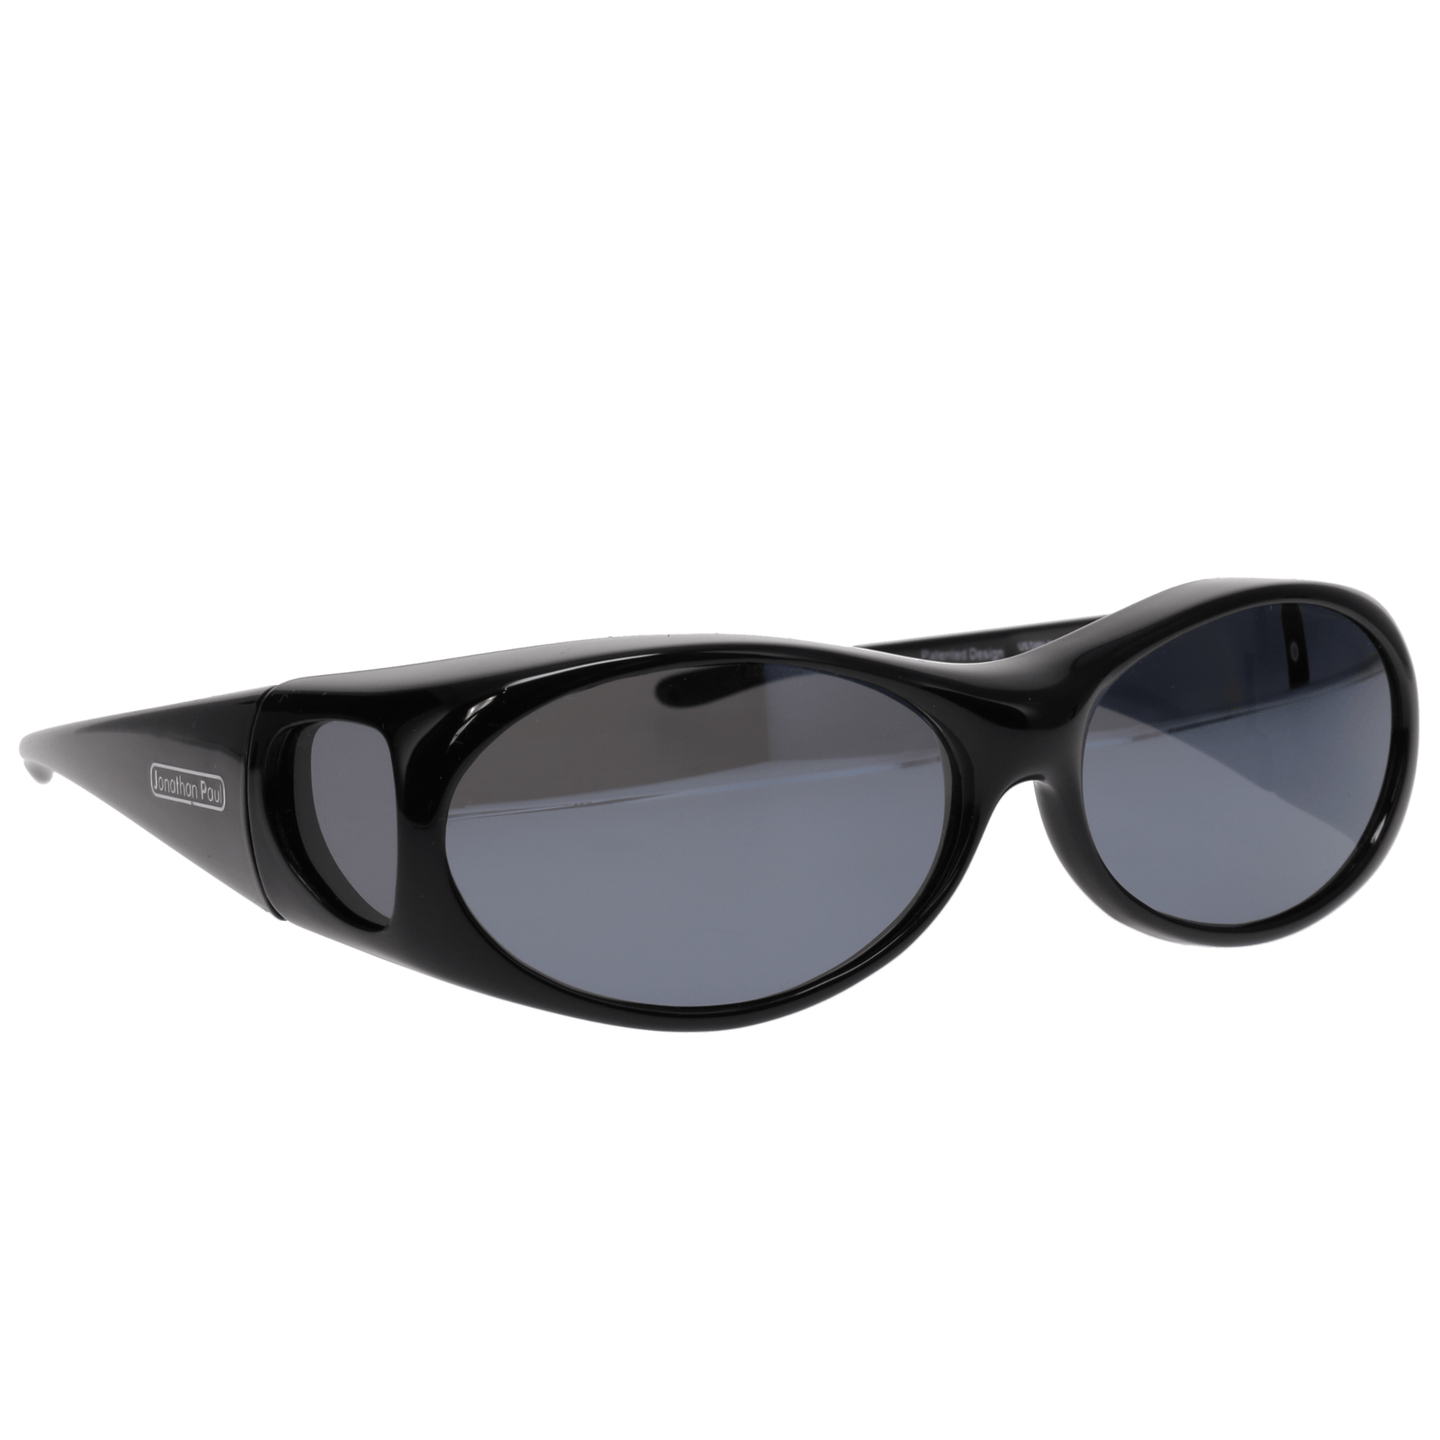 Fitover Sunglasses 'Aurora' Midnight Oil - Grey Lens